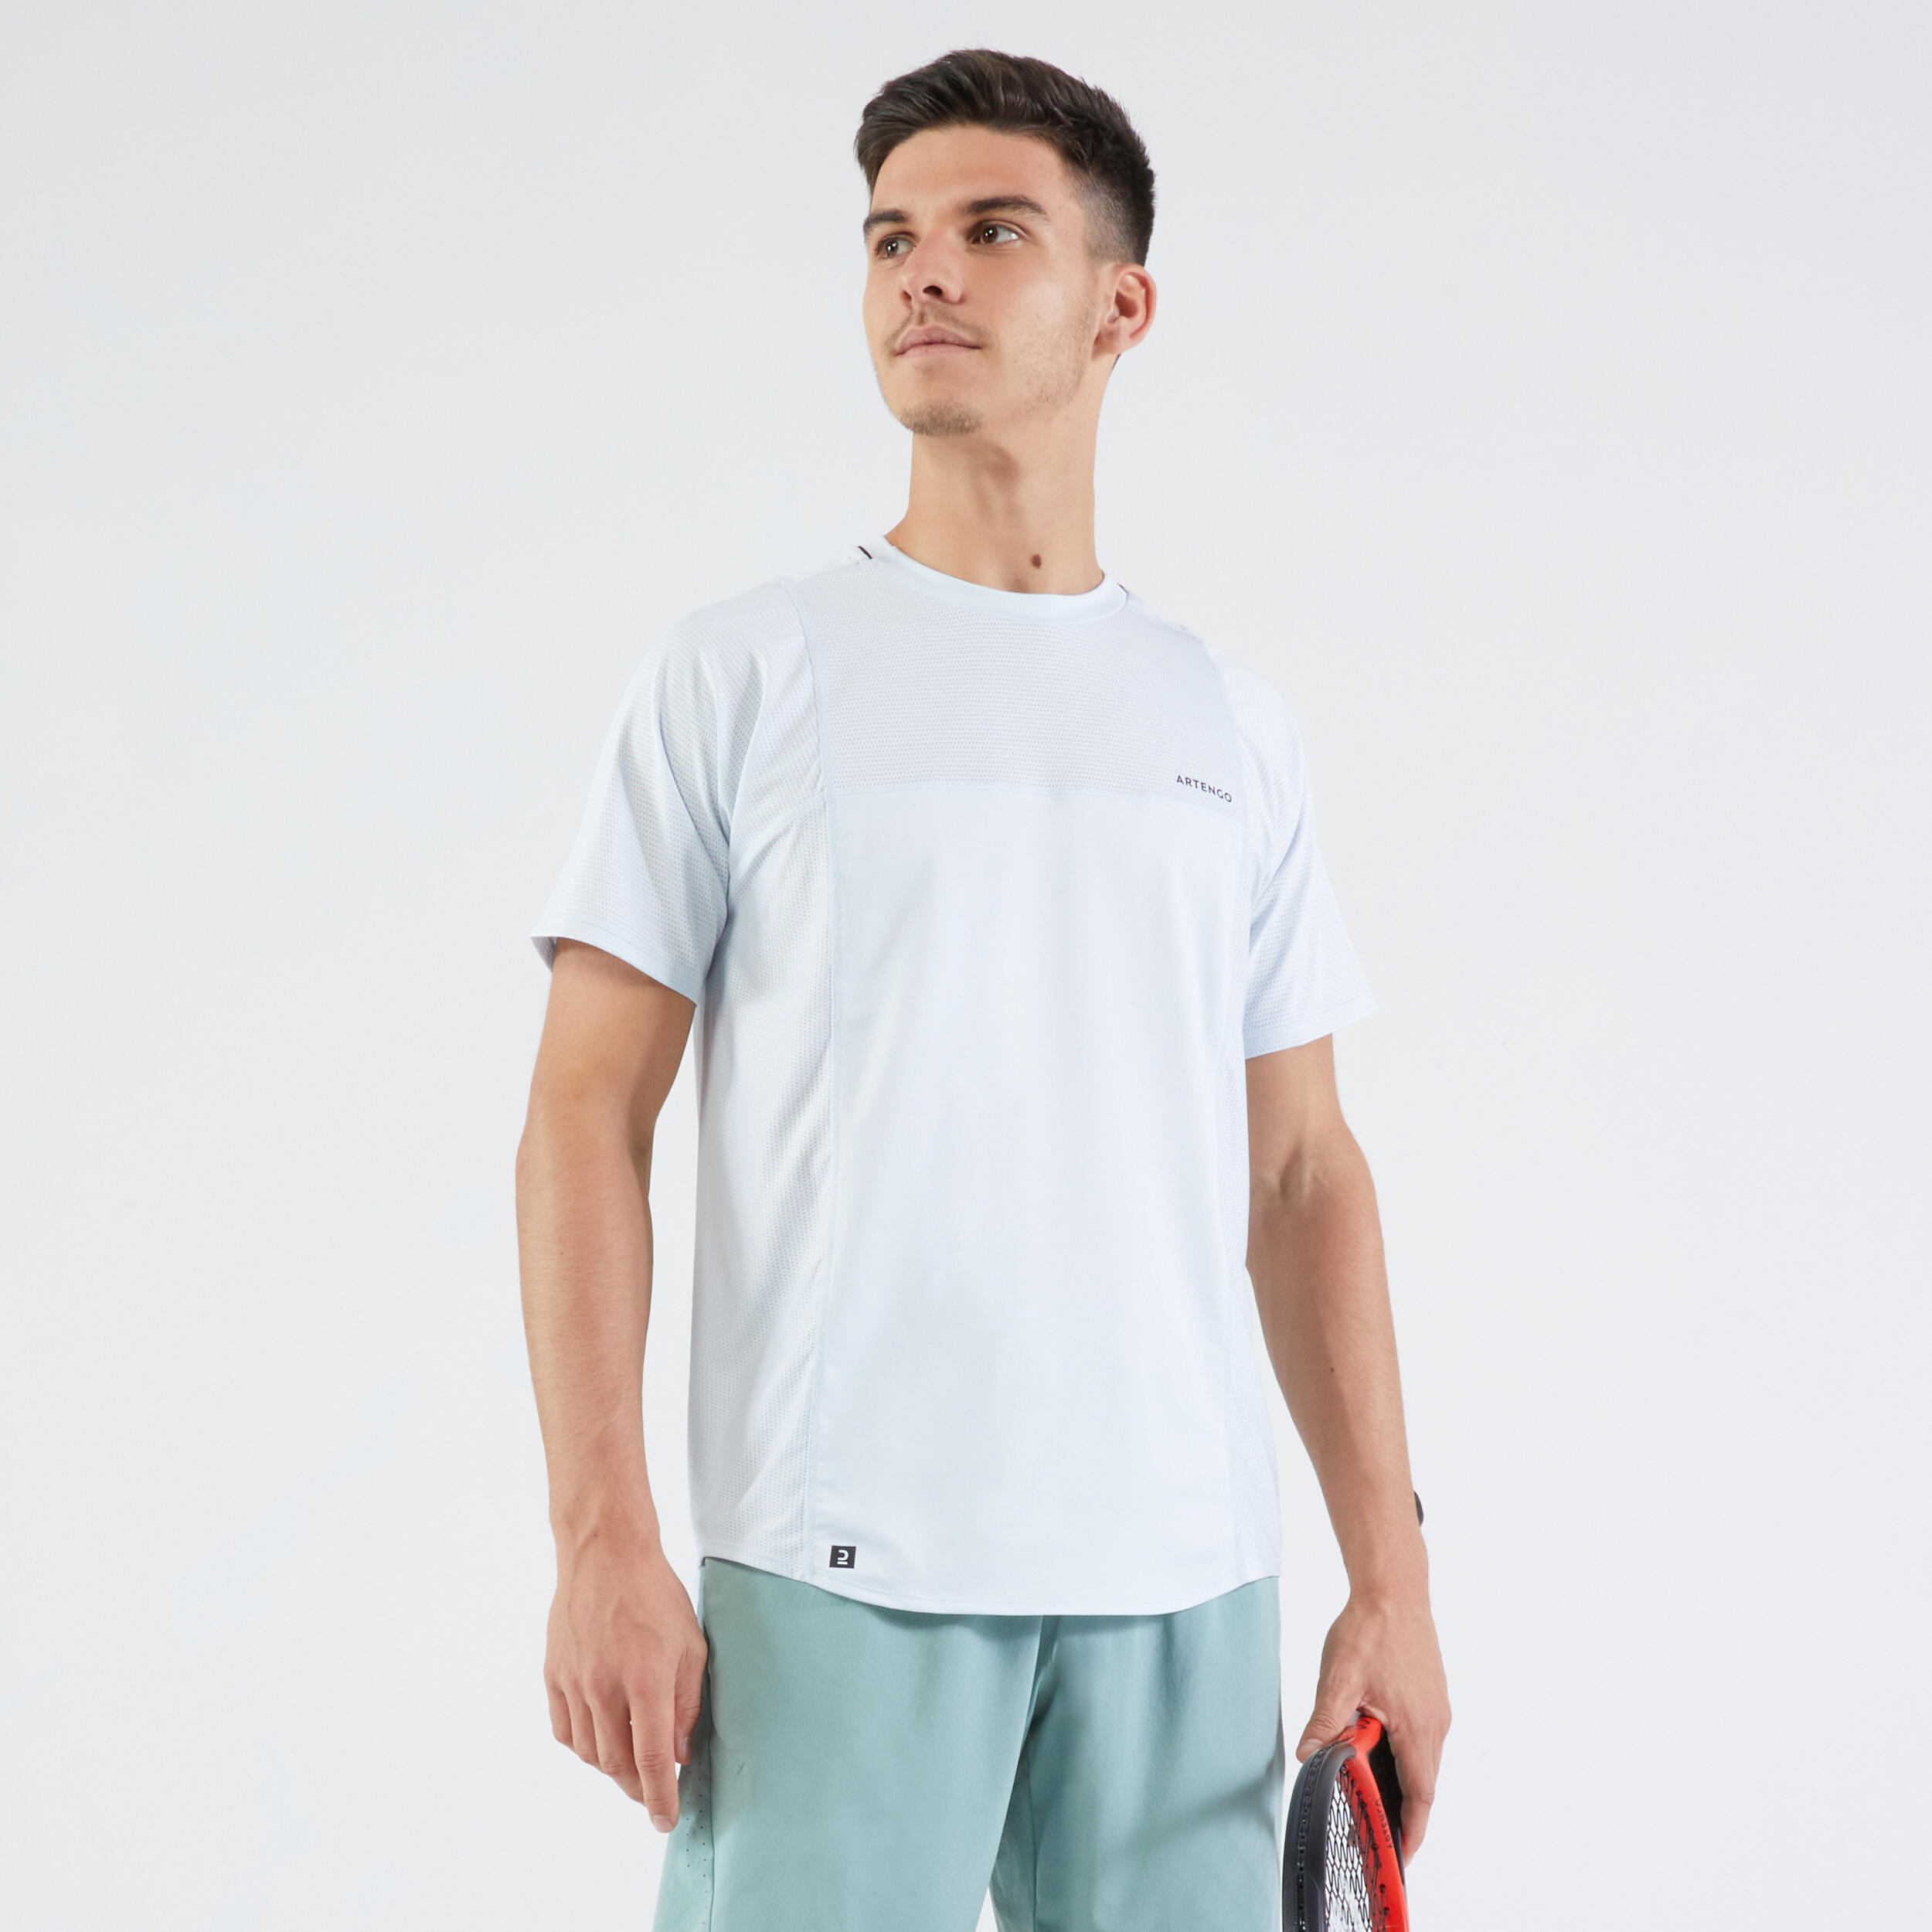 ARTENGO Men's Short-Sleeved Tennis T-Shirt Dry - Grey Gaël Monfils